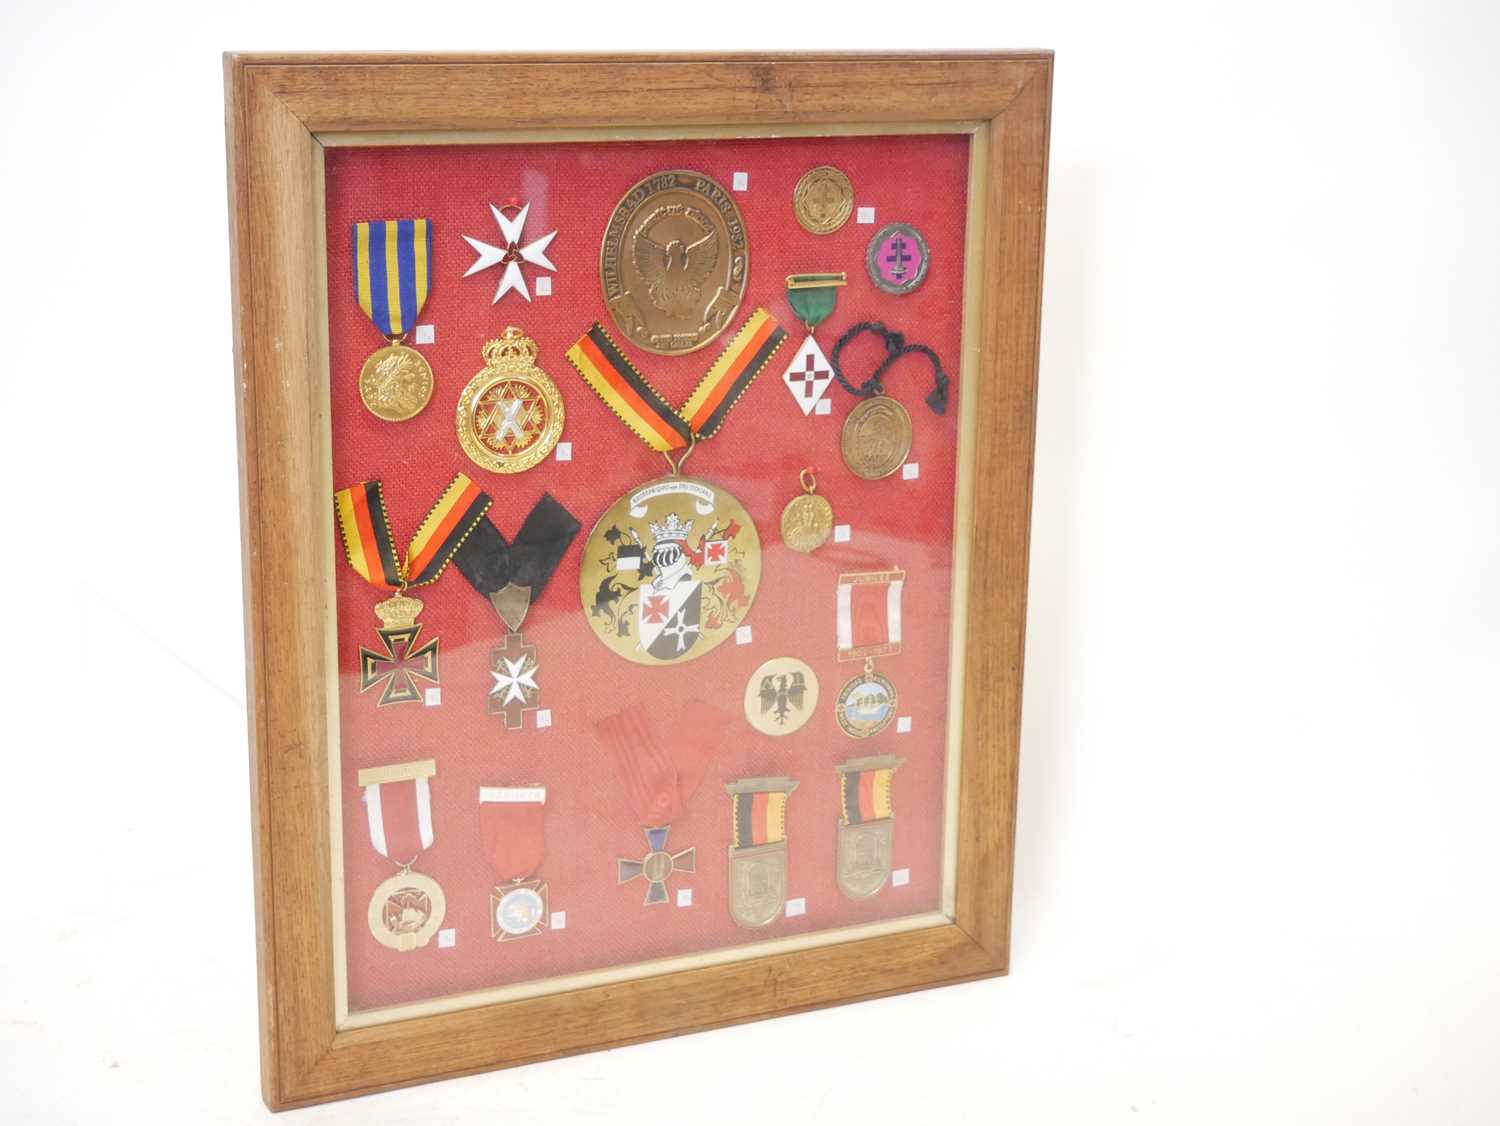 Framed photograph & WWI medals awarded to H.H. Liddell-Granger - Image 6 of 9